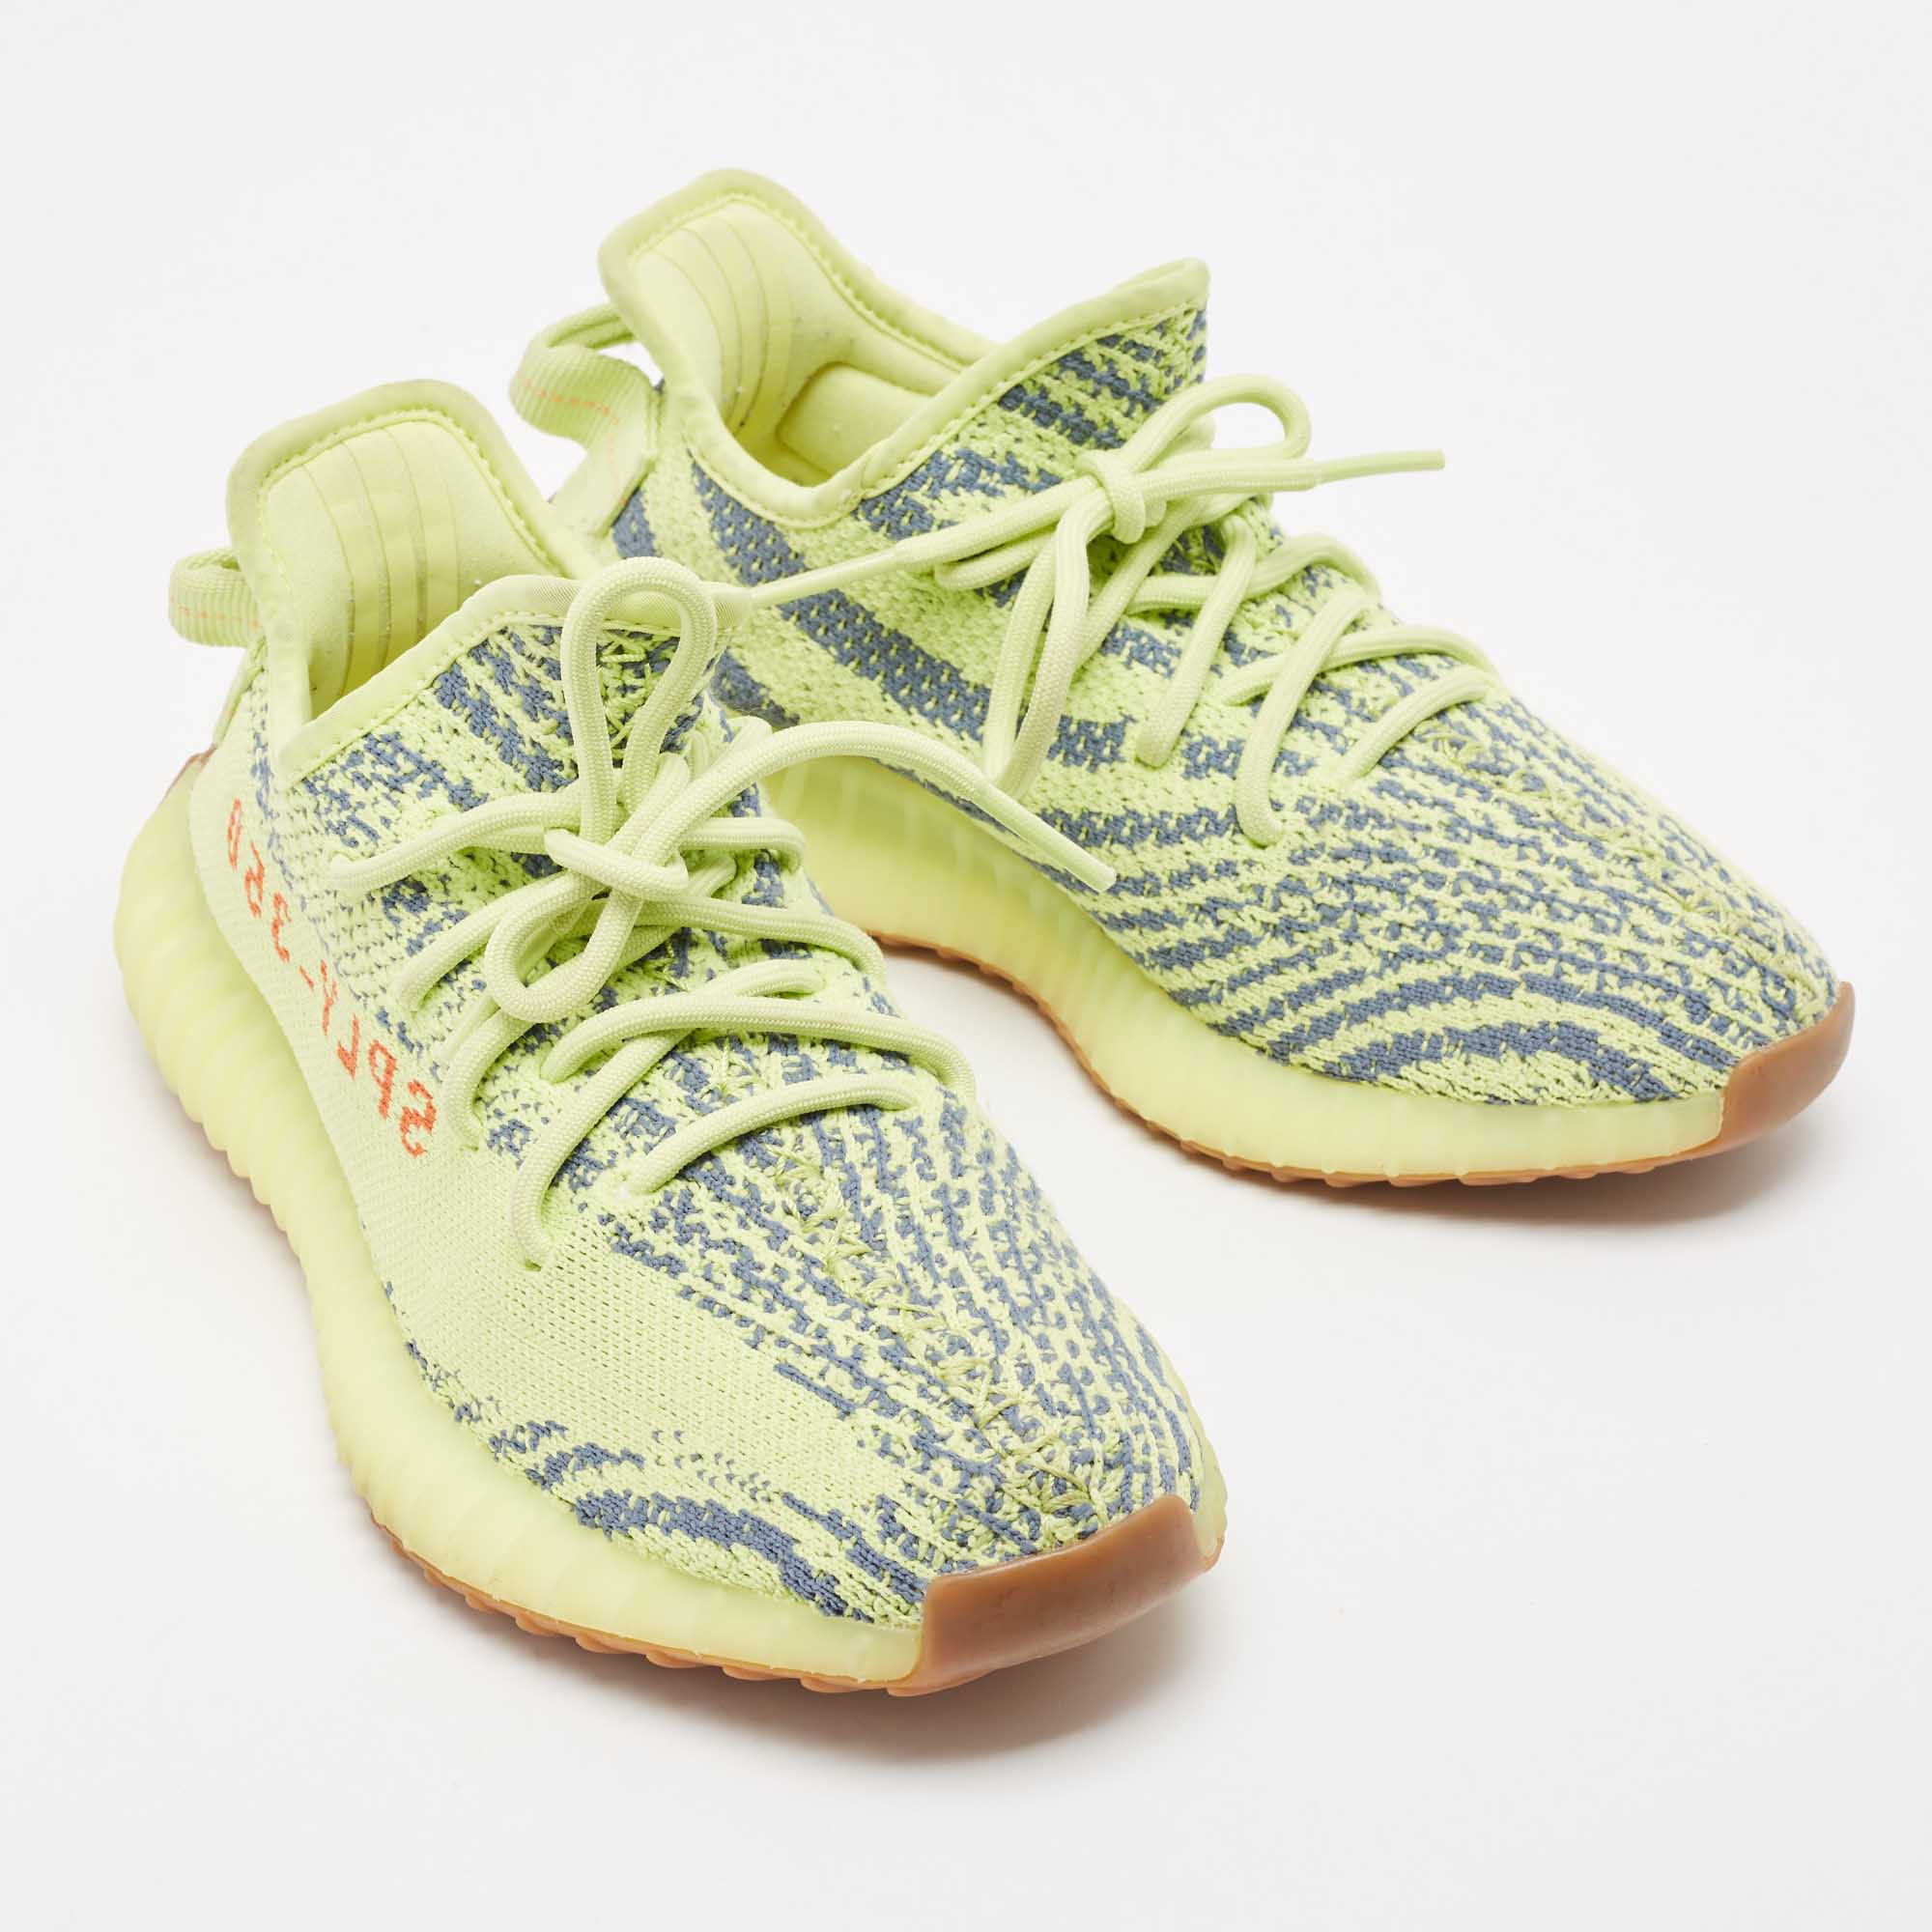 Yeezy X Adidas Neon Yellow Knit Fabric Boost 350 V2 Semi Frozen Yellow Sneakers Size 38